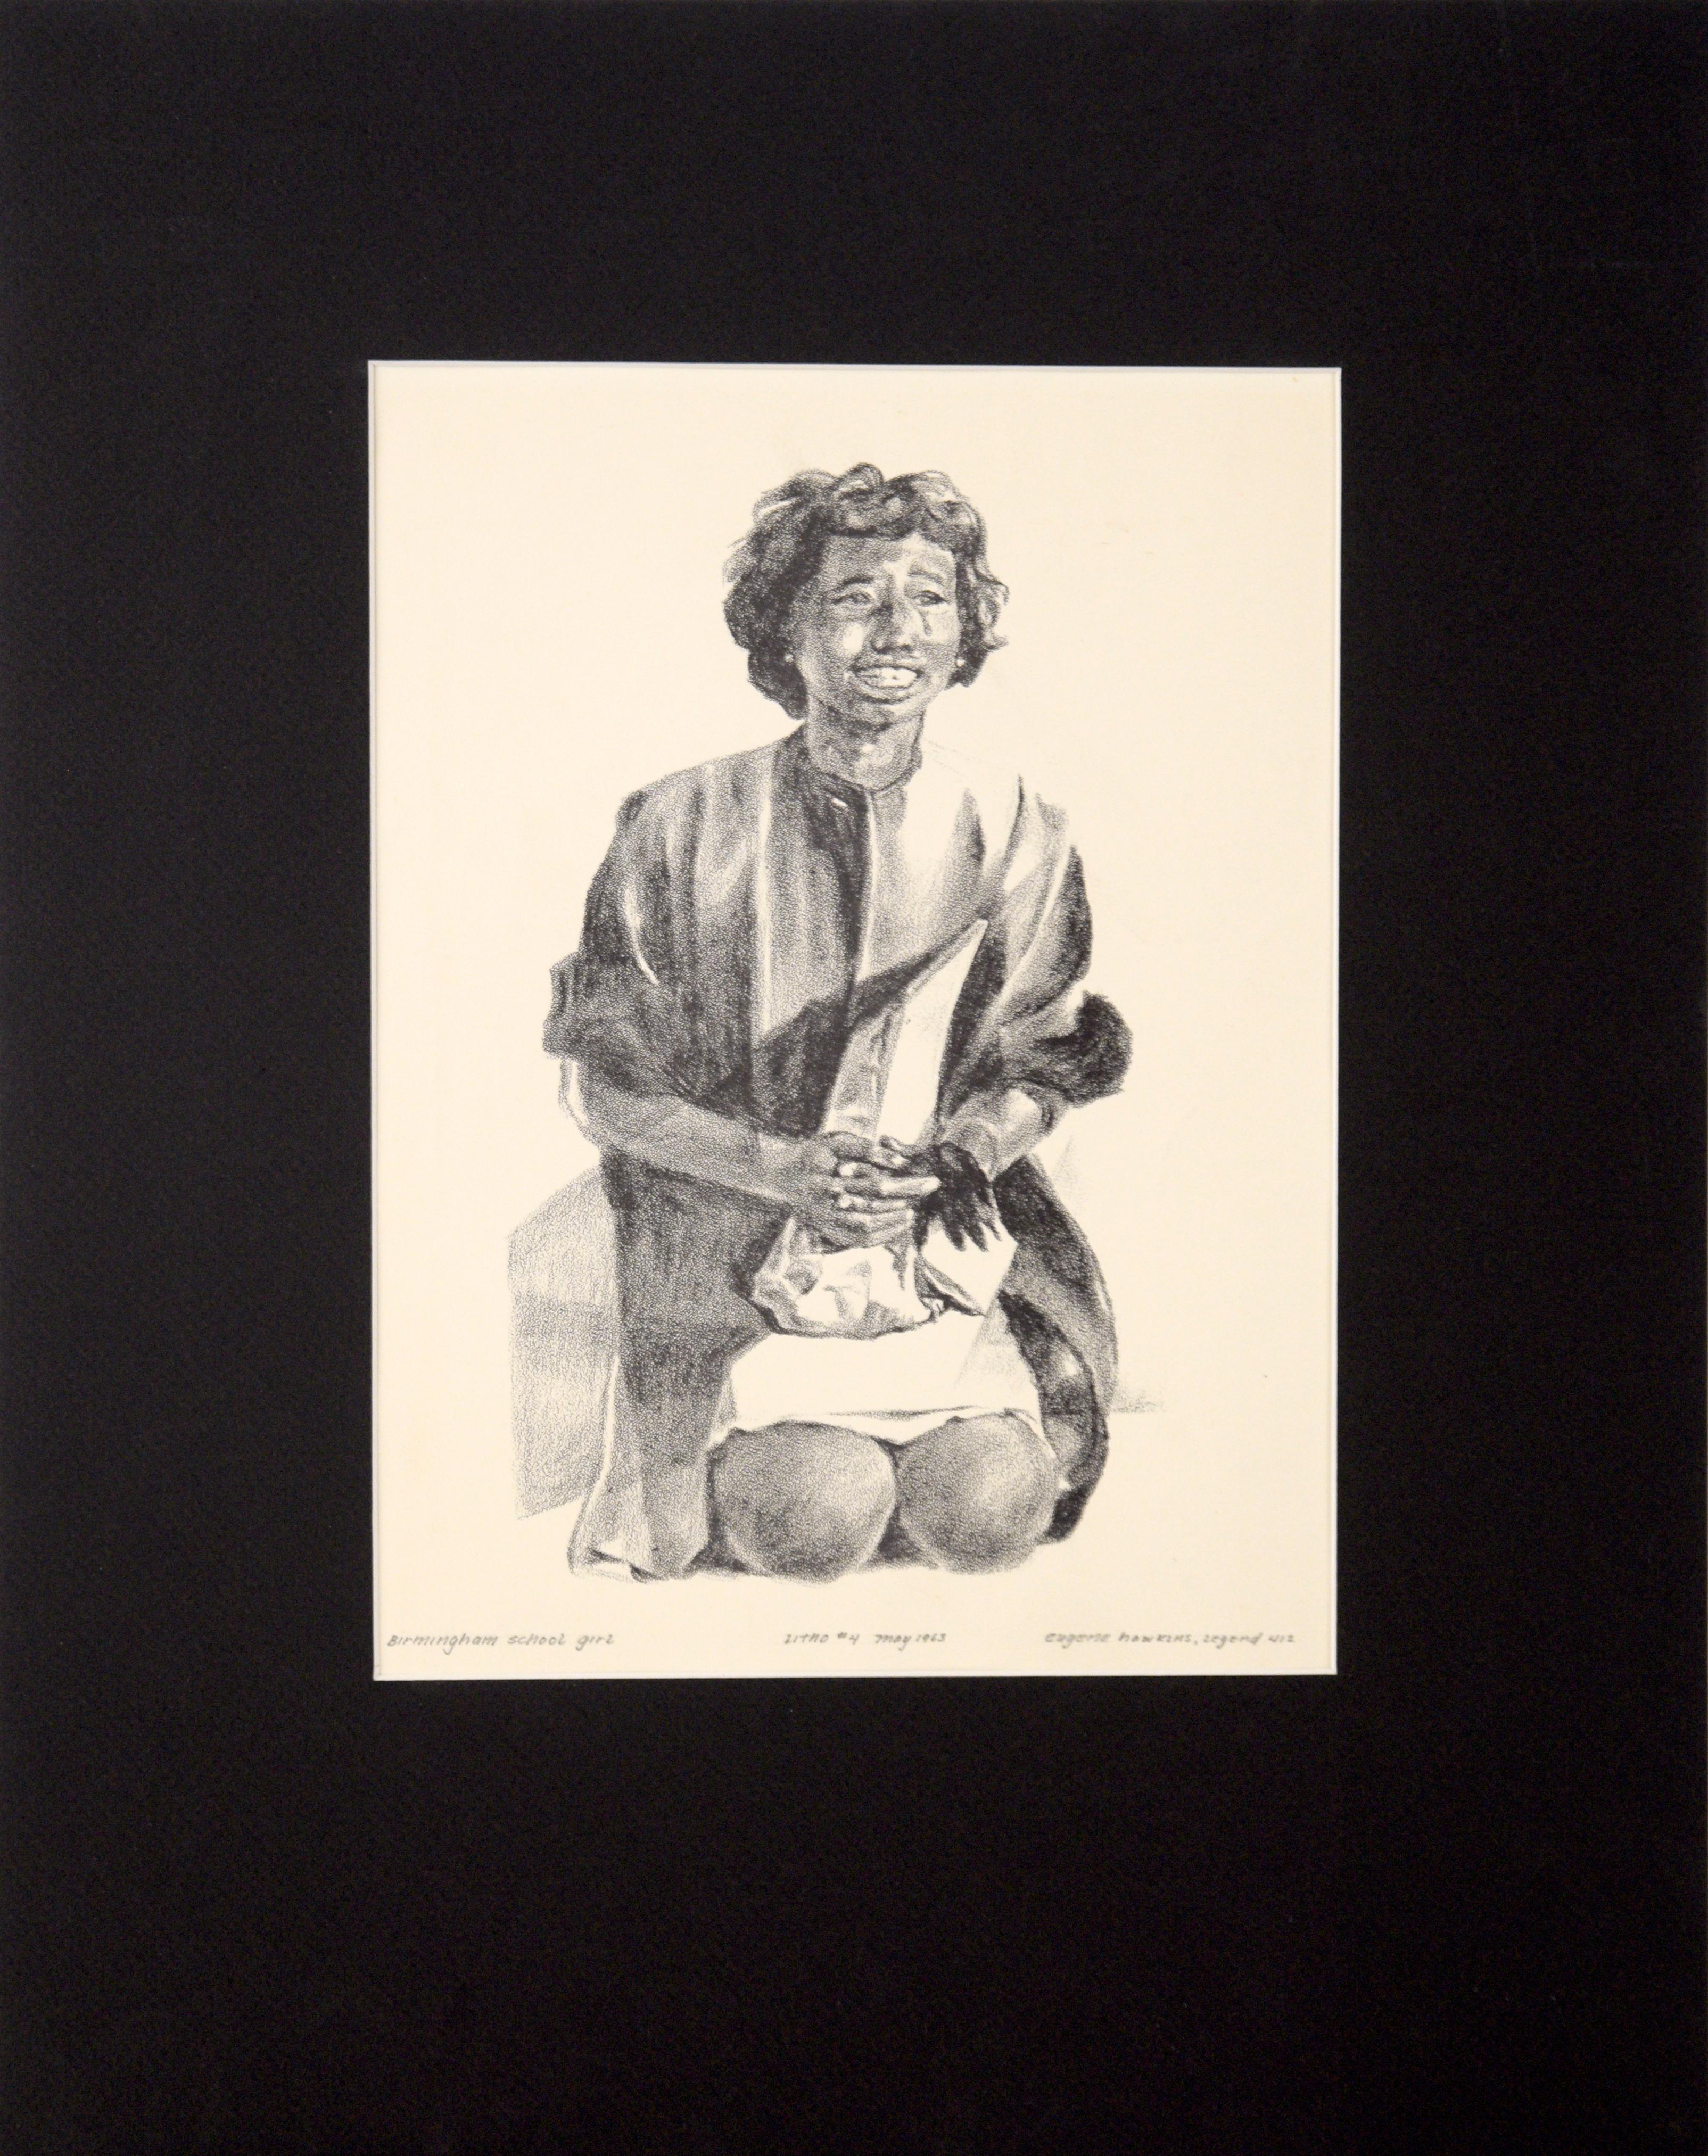 Eugene Hawkins Figurative Print – „Birmingham School Girl“ – seltene signierte figurative Lithographie in Tinte auf Papier